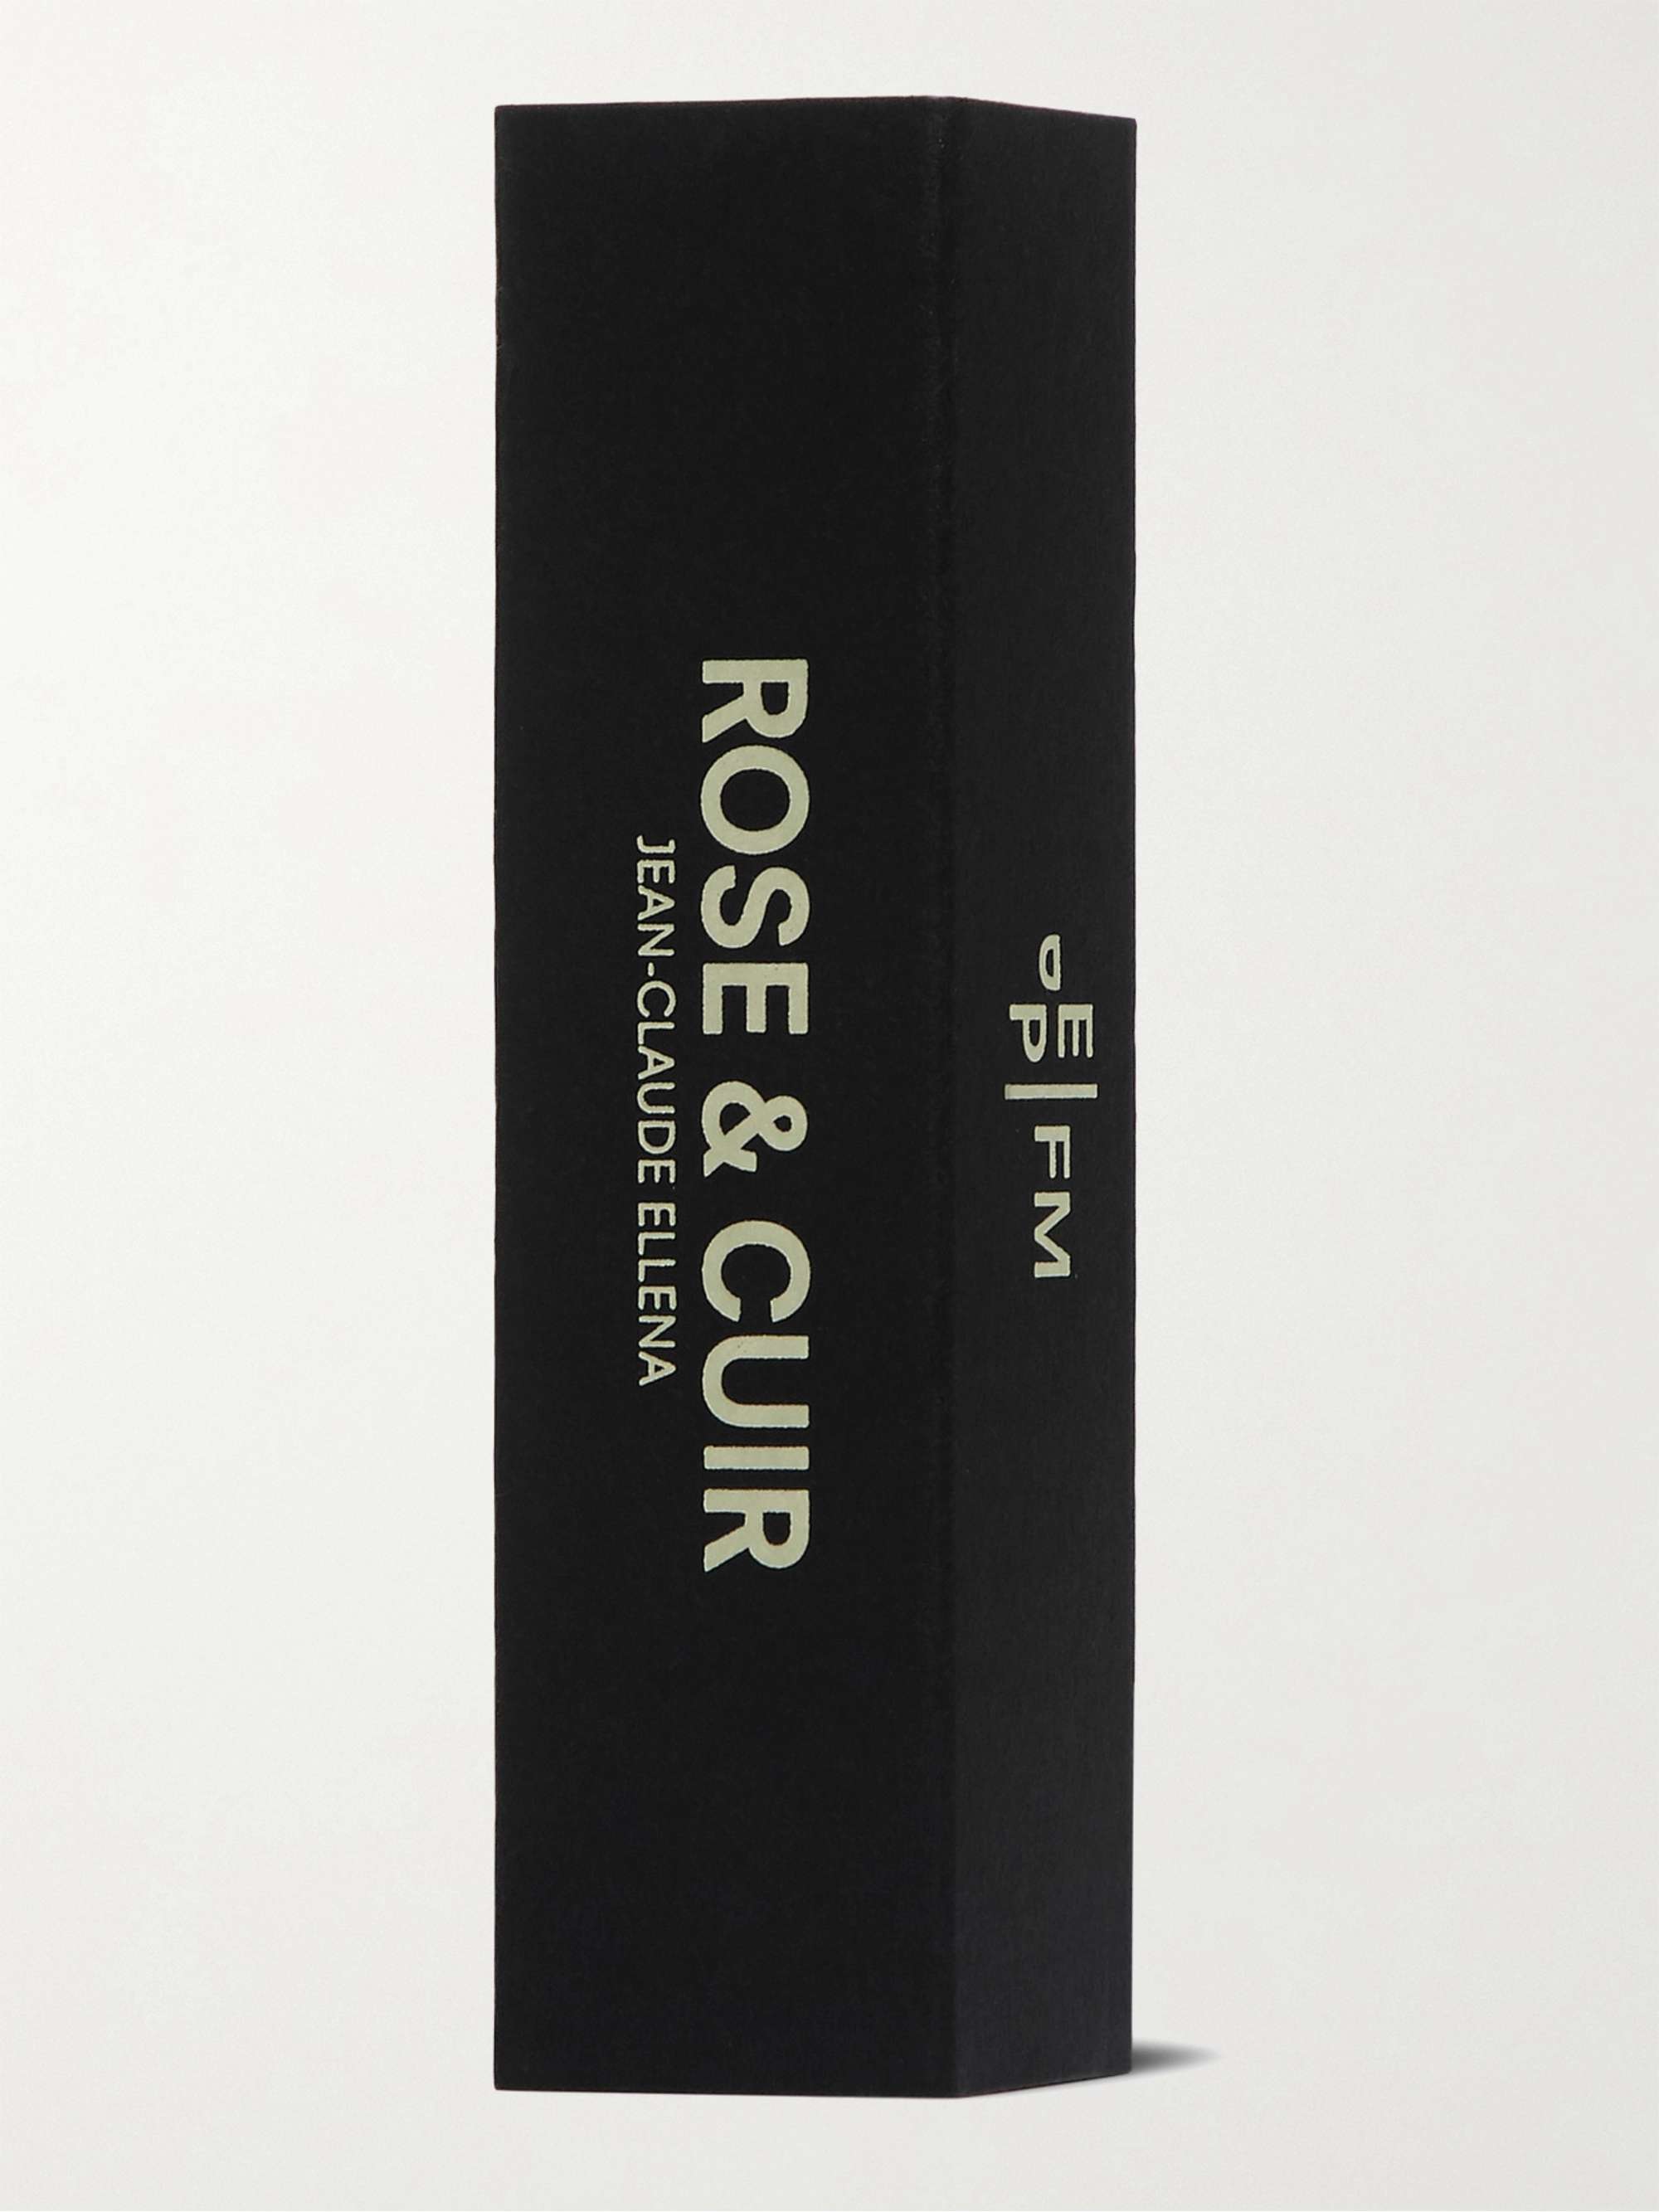 Frederic Malle Rose & Cuir Eau de Parfum, 10ml